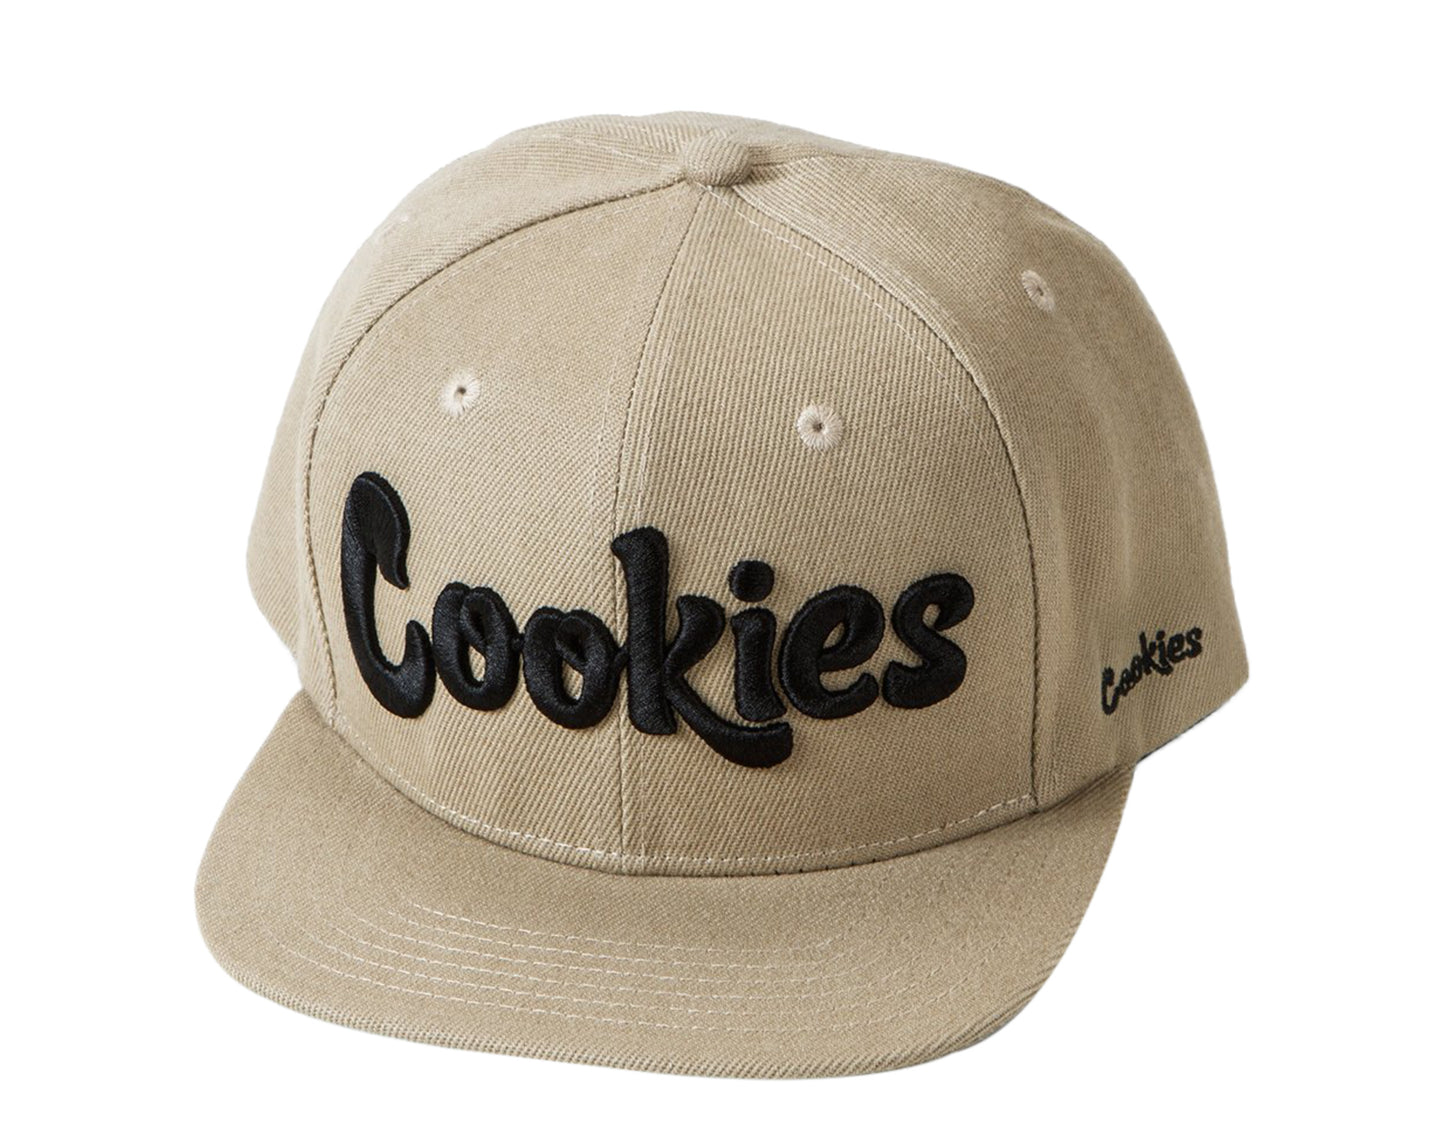 Cookies Original Logo Thin Mint Adjustable Khaki/Black Snapback 1546X4391-KHB